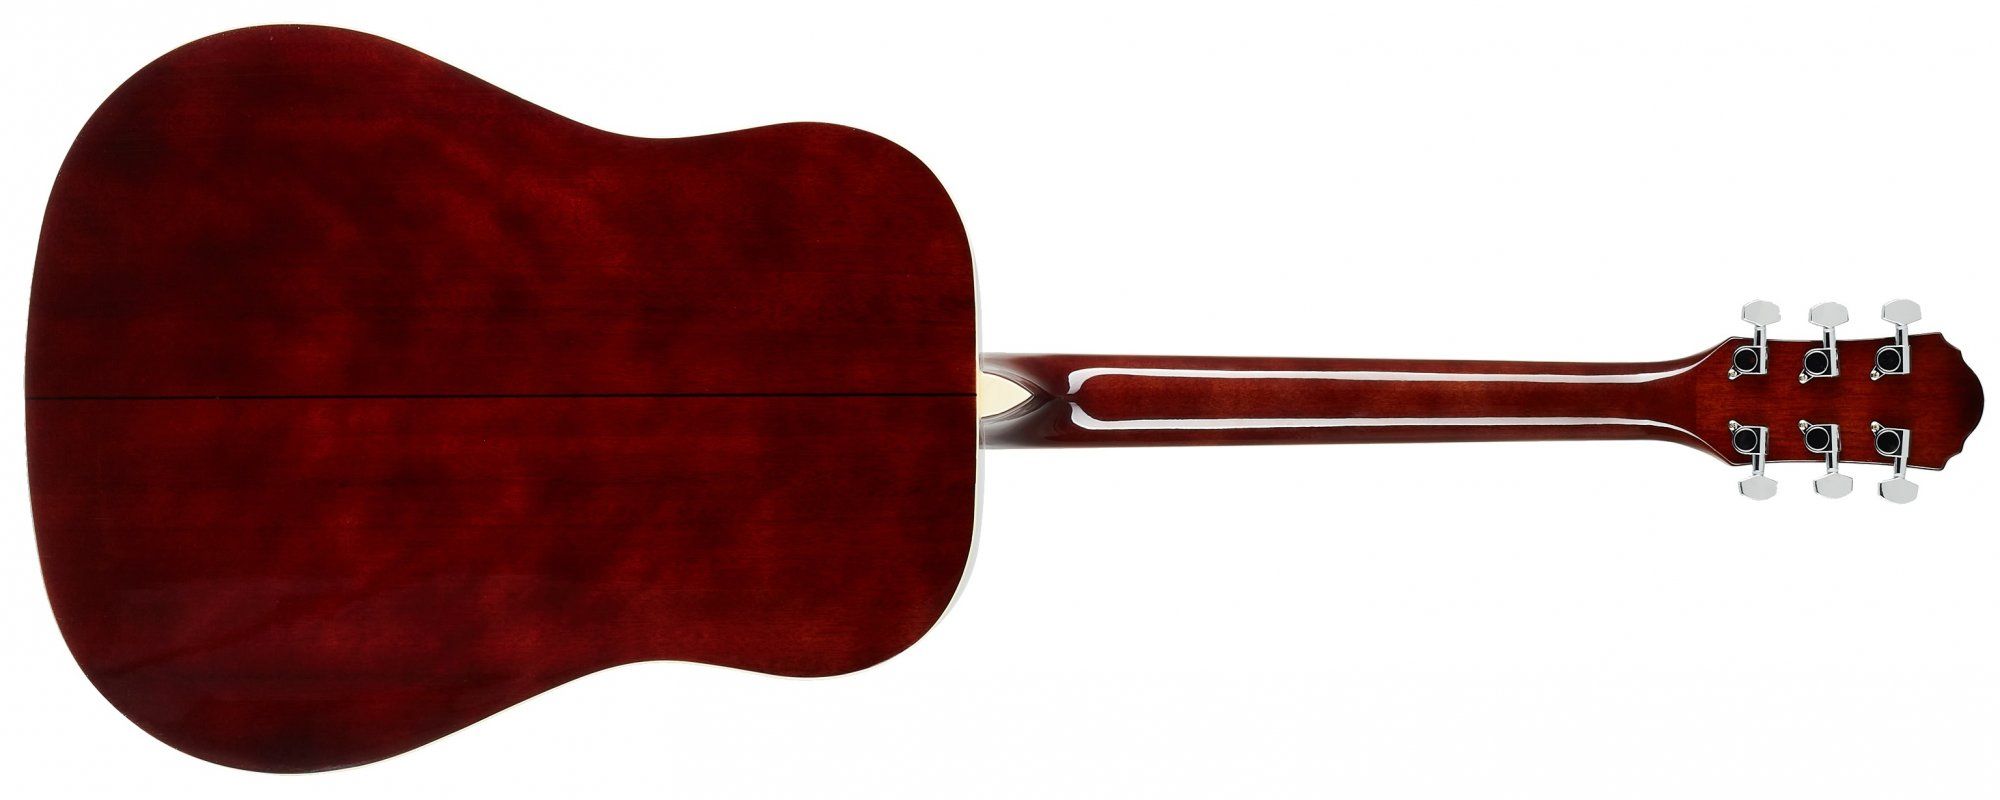  krásna akustická gitara oscar schmidt menzúra 650 mm vrstvený korpus lesklá povrchová úprava vhodná na hru trsátkami a prstami 